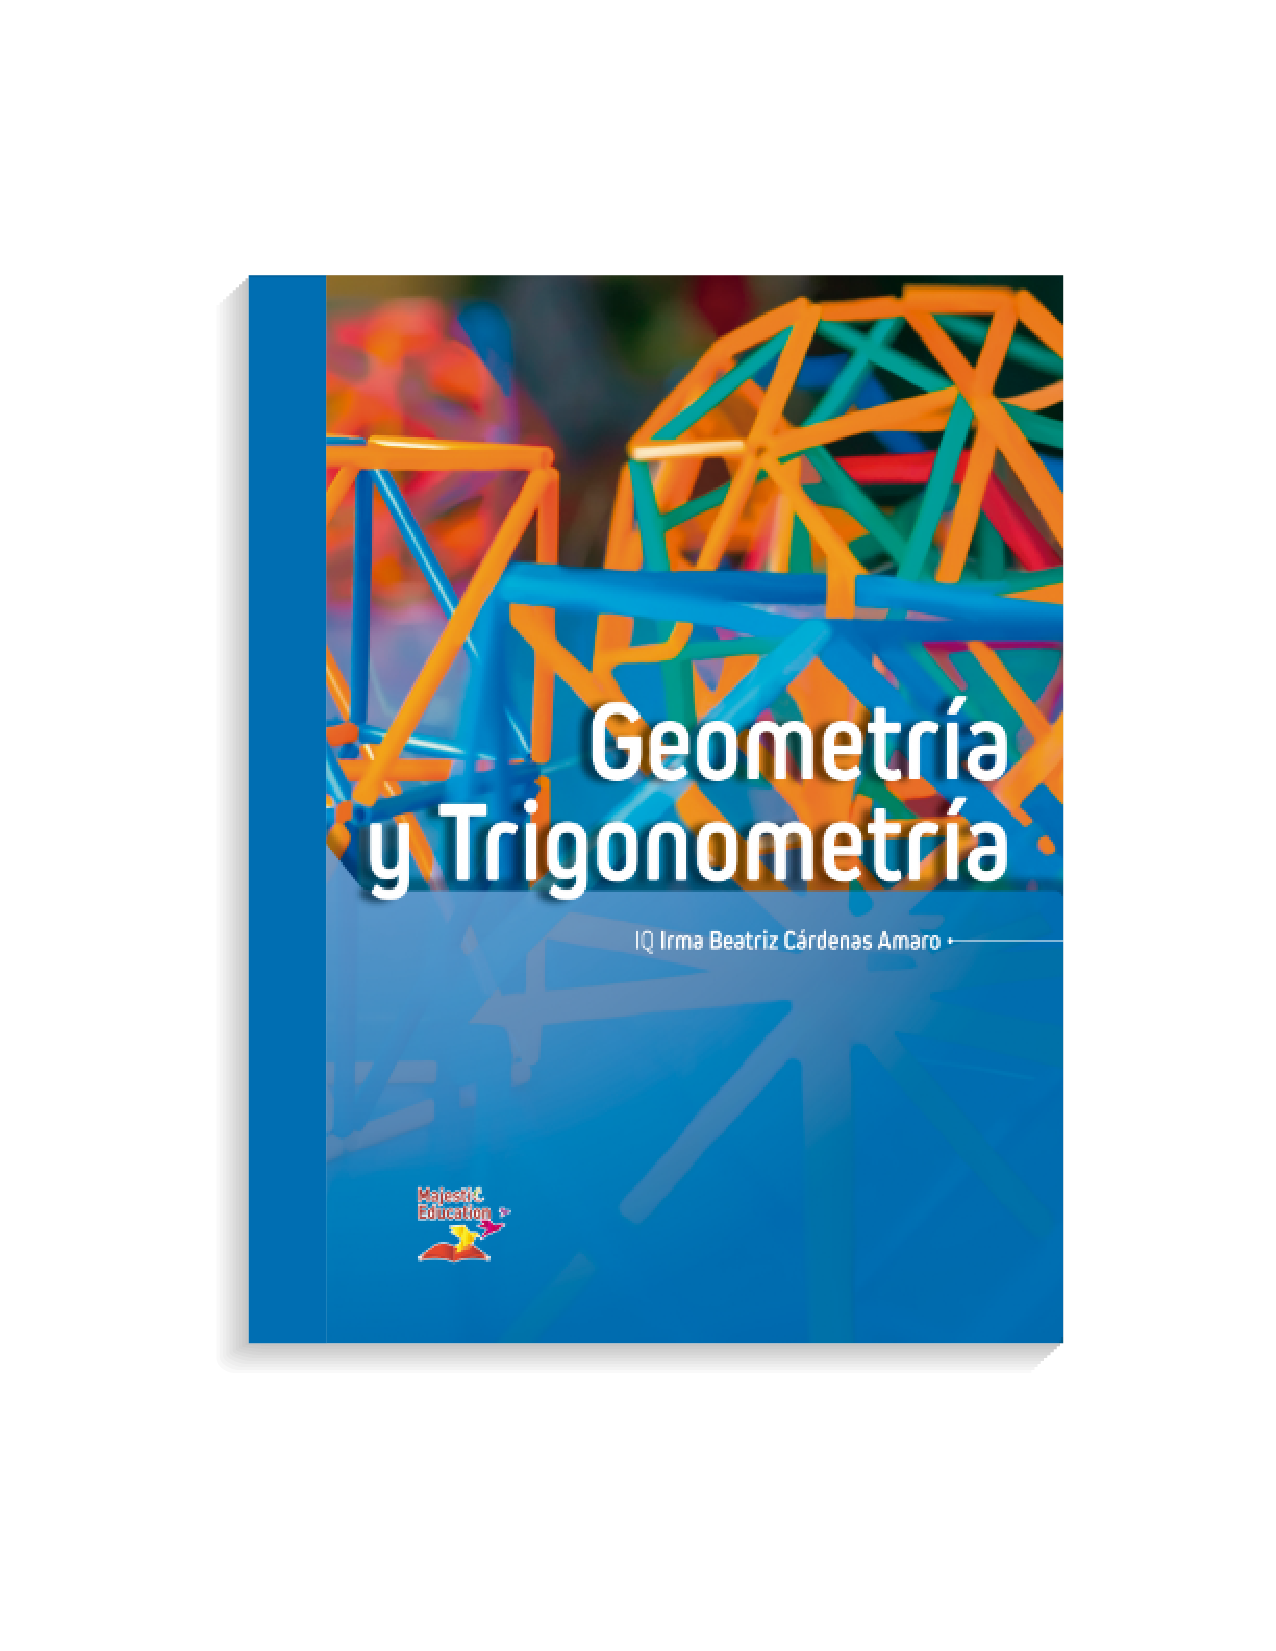 Geometría Y Trigonometria Pack Digital Físico Omega Book Company 8322